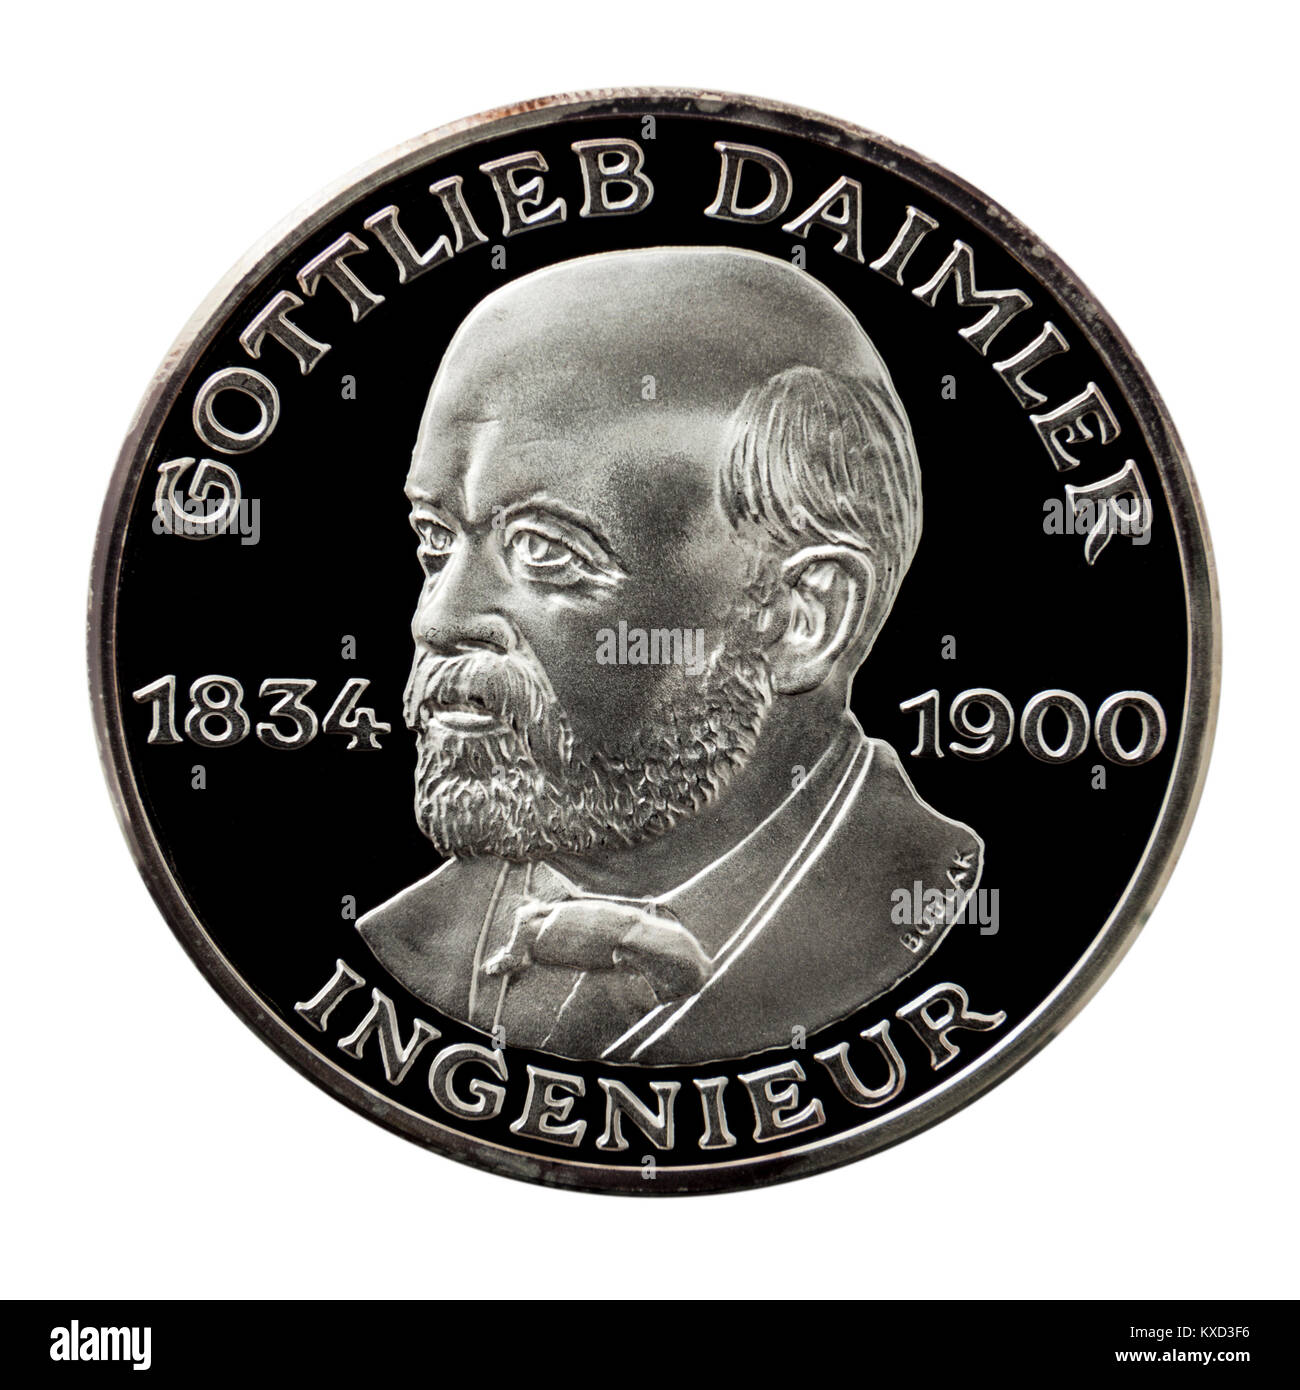 99,9% Prova Silver Medallion dotate di Wilhelm Gottlieb Daimler (1834-1900), il fondatore della Daimler Motoren Gesellschaft (DMG) nel 1890. Foto Stock